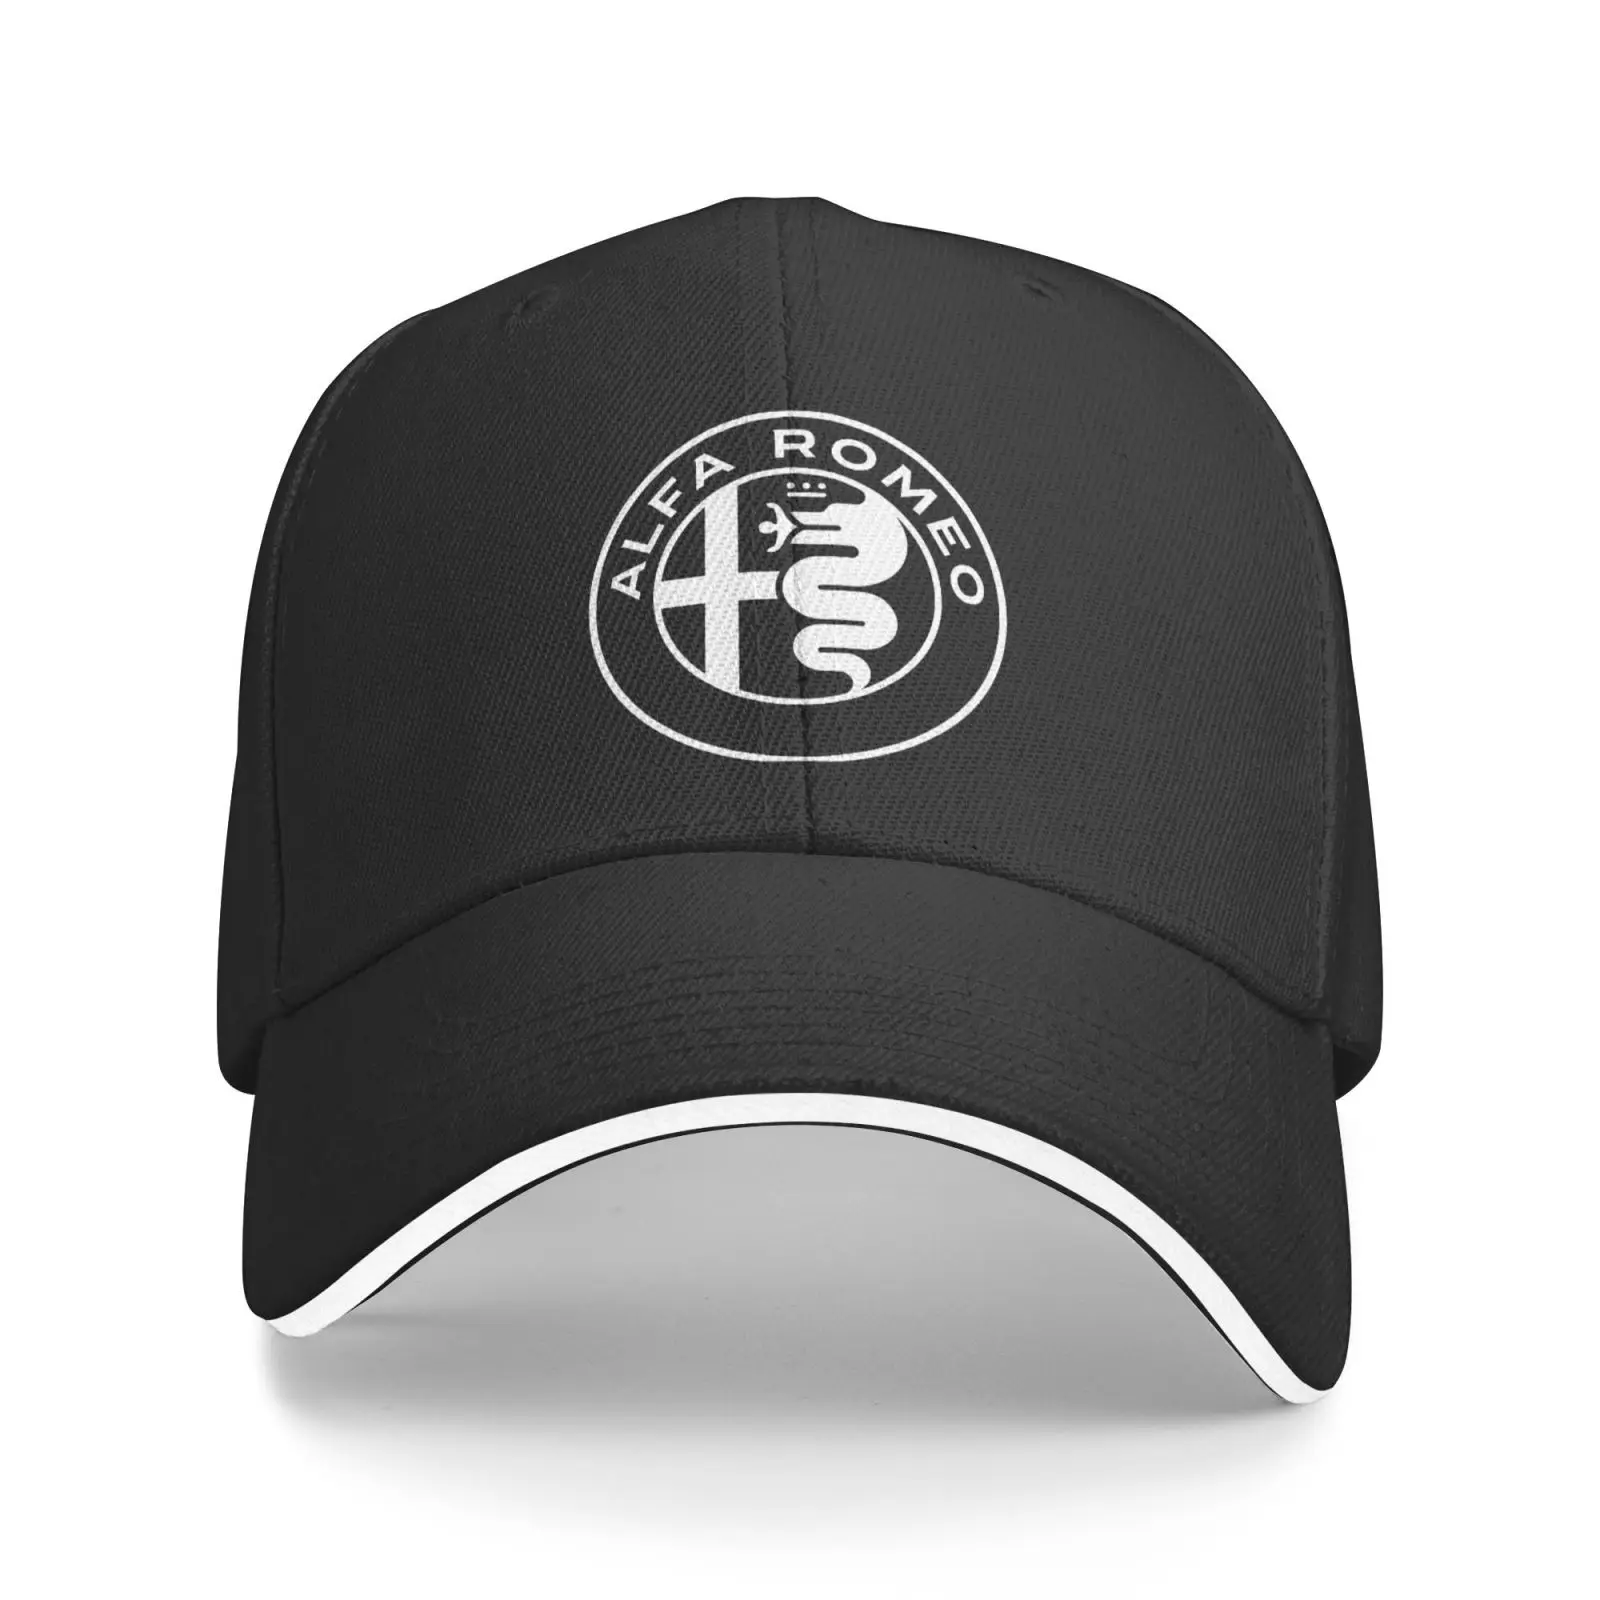 

Бейсболка Alfa Romeo 2, Мужская бейсболка, Балаклава, шапка для мужчин, Детская кепка, шапки для женщин, летняя шапка унисекс, женская кепка 1